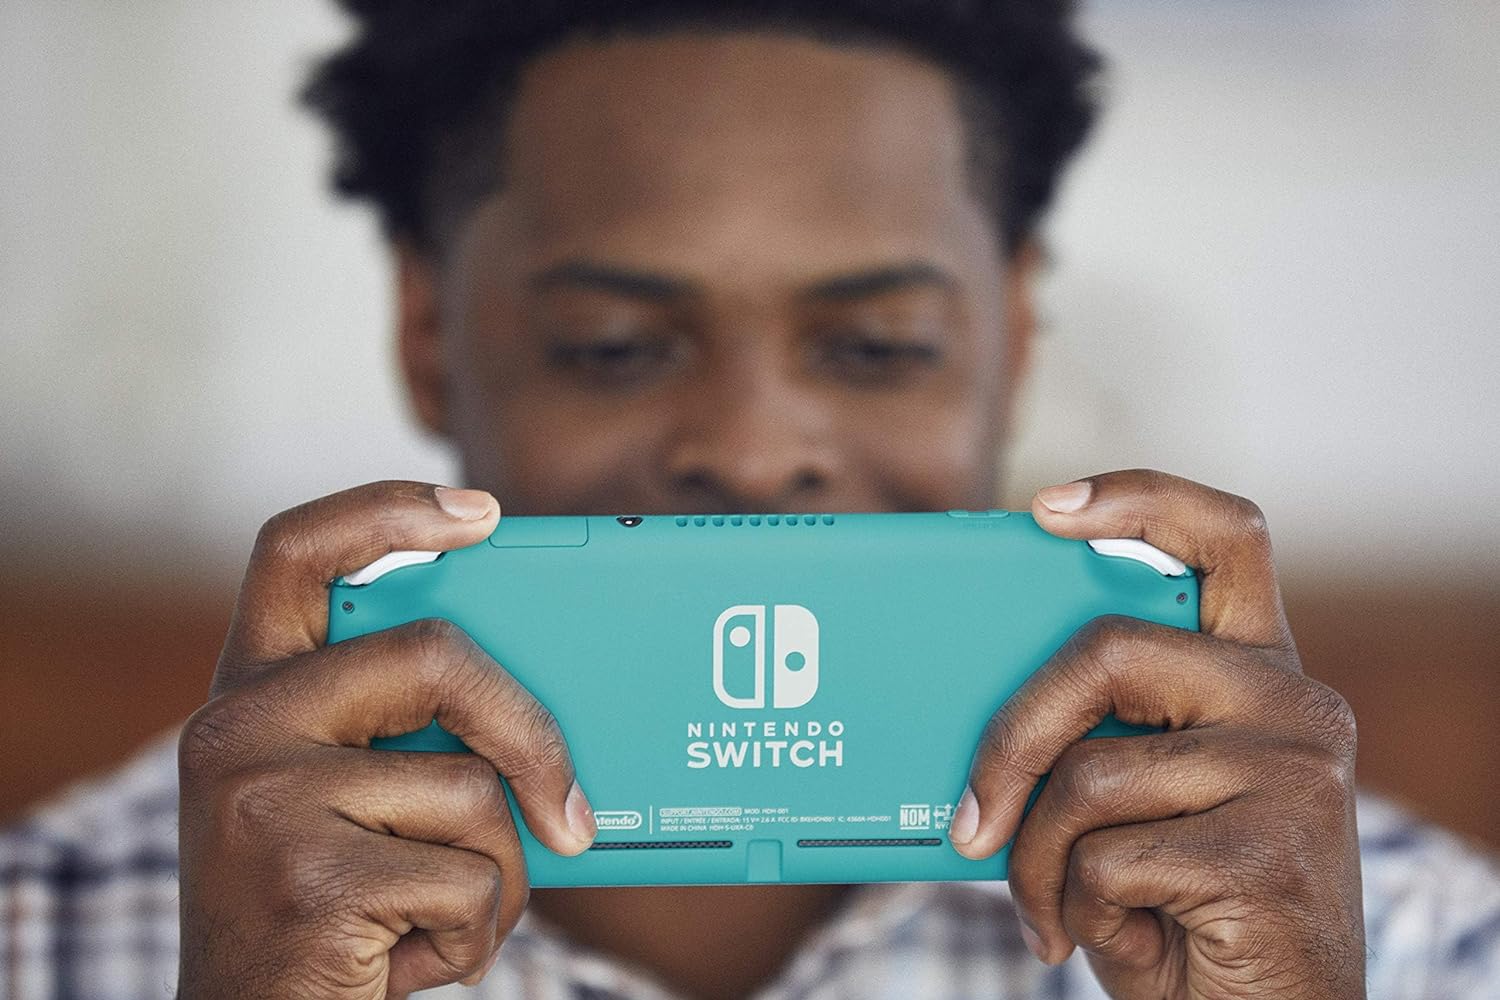 Nintendo - Switch Lite - 32GB - Turquoise (New)